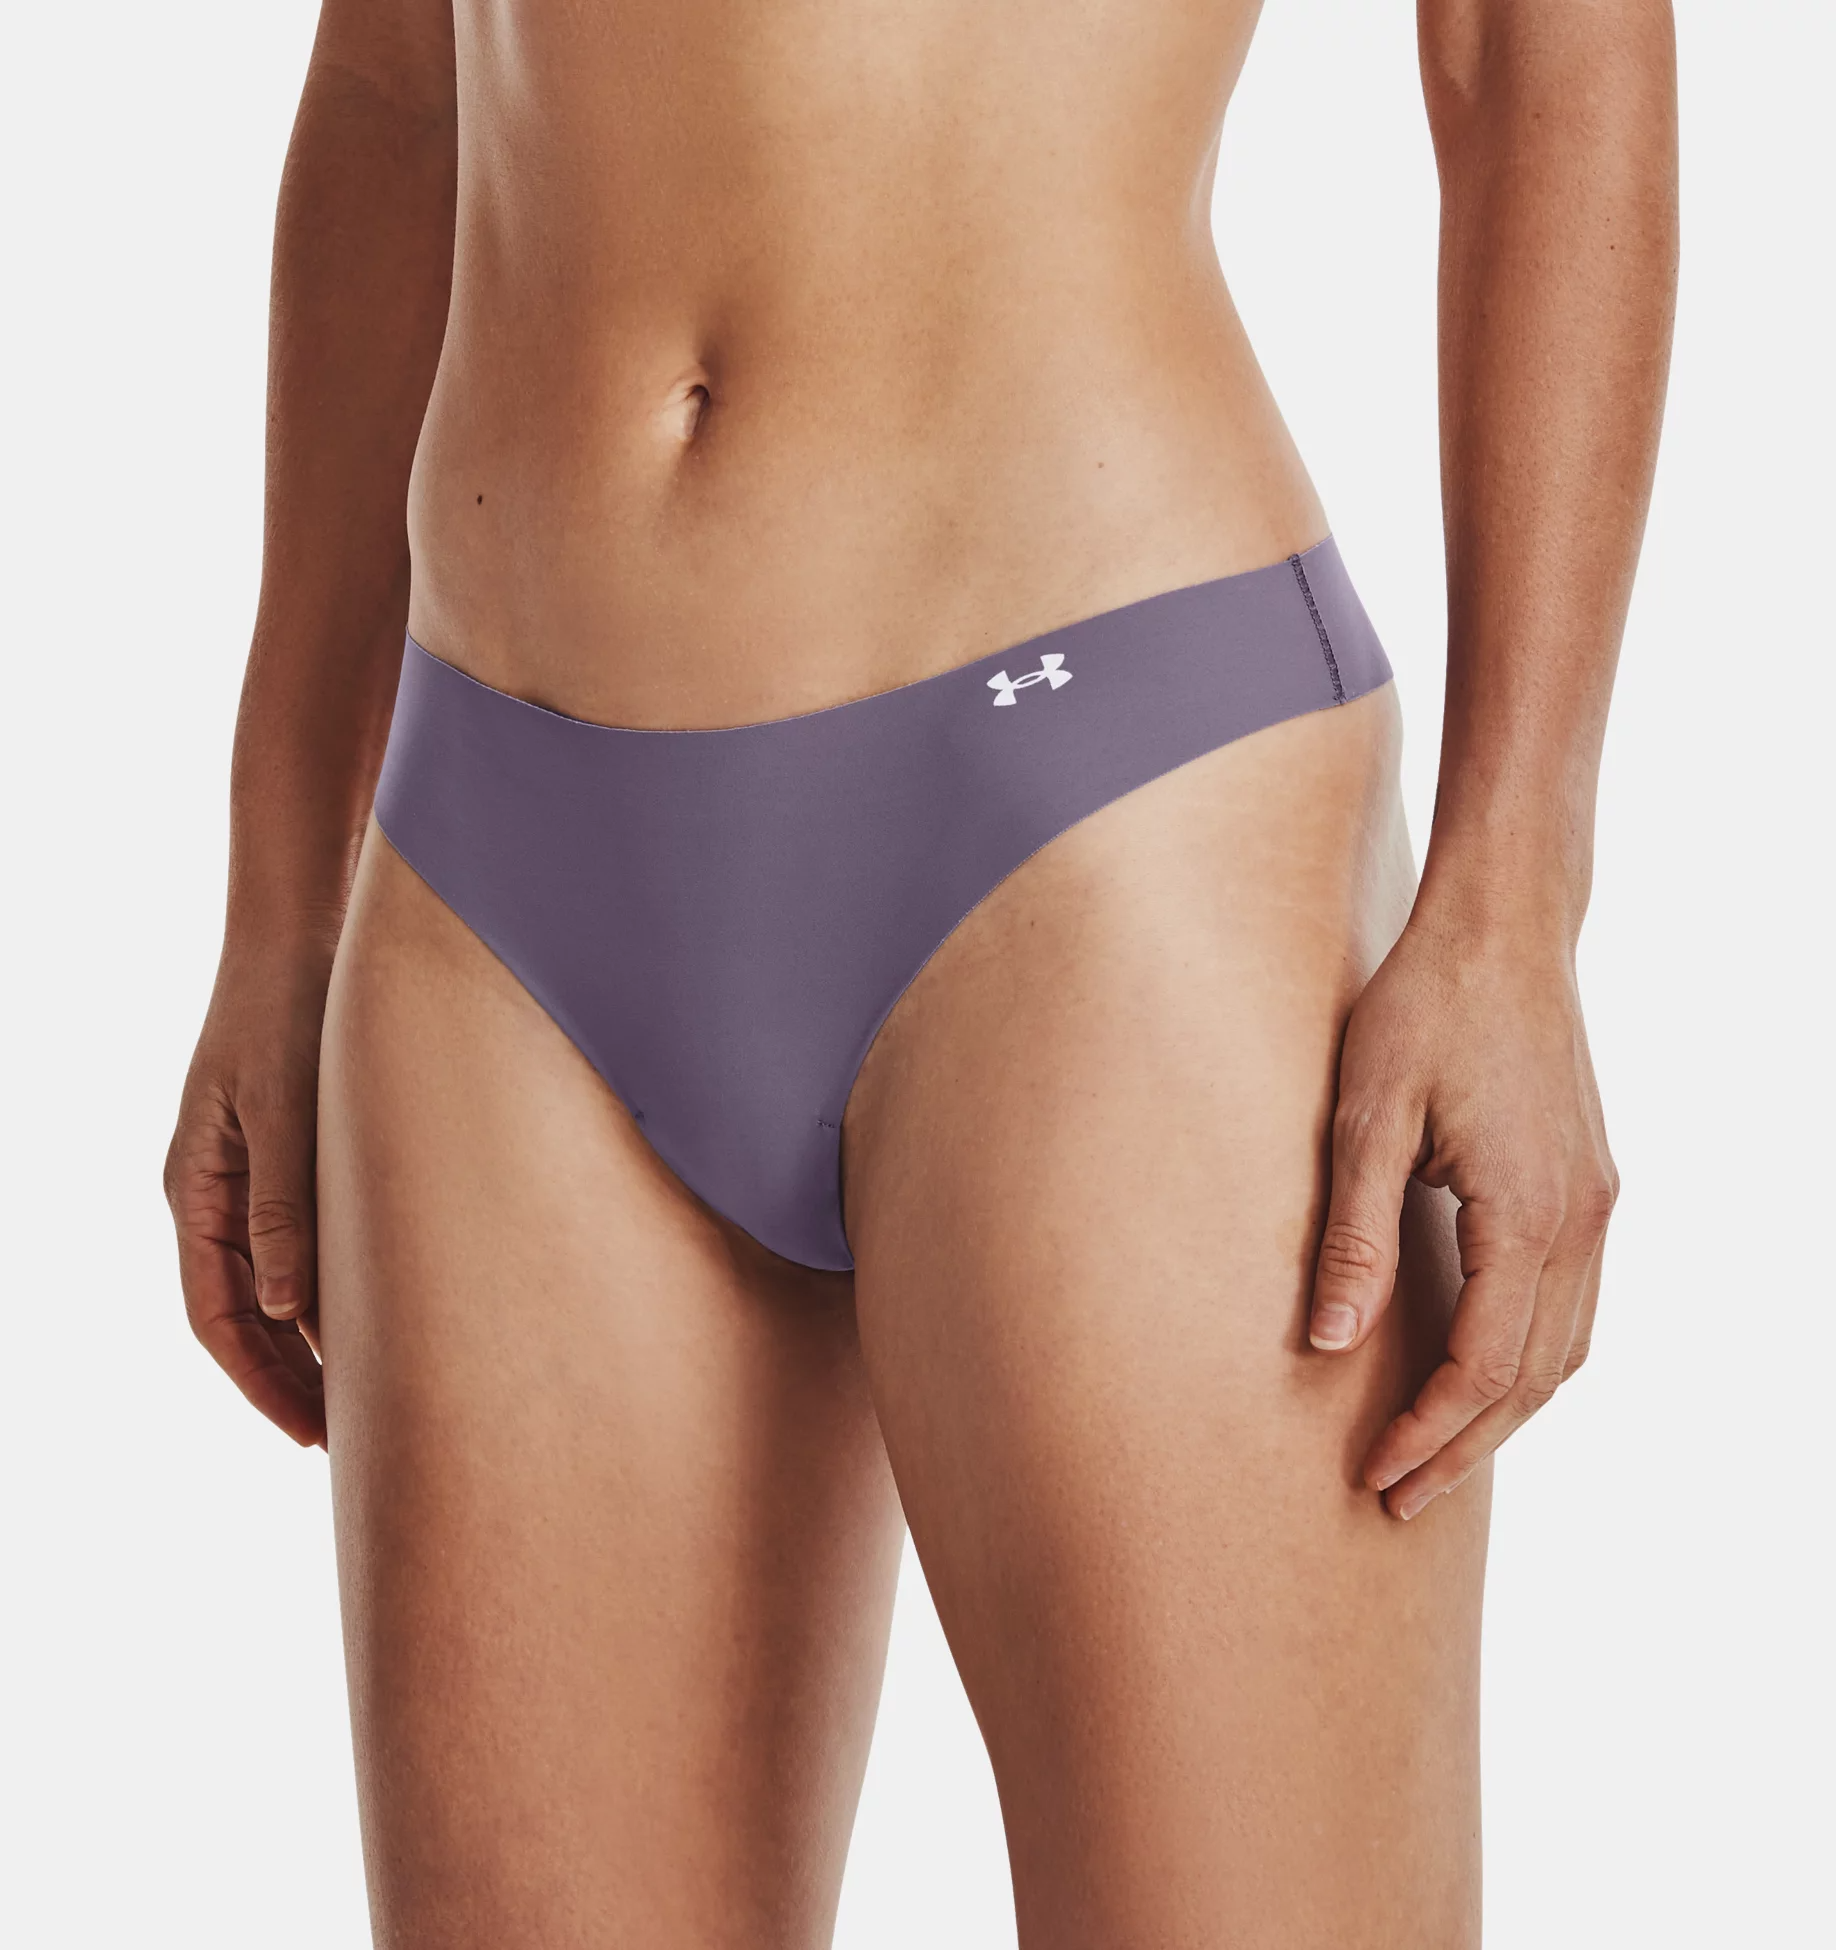 Best Thong Underwear, Most Comfortable Customer Reviews